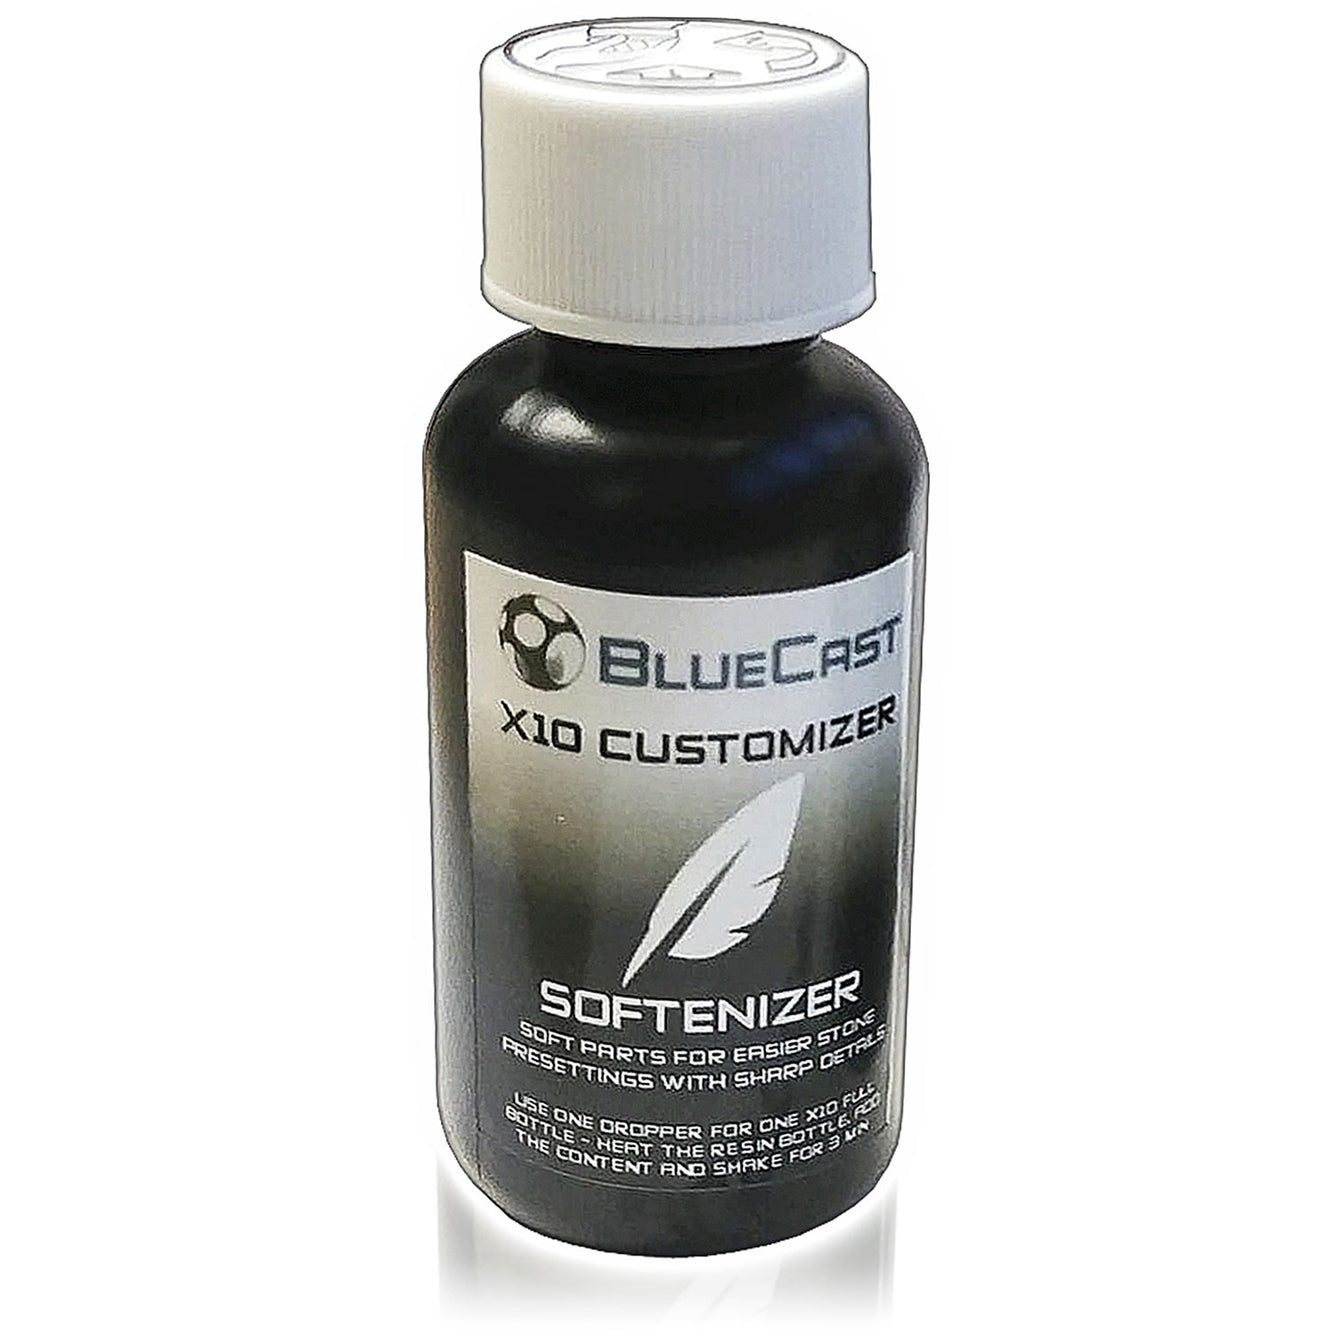 BlueCast Original Castable Resin for Formlabs - 500g